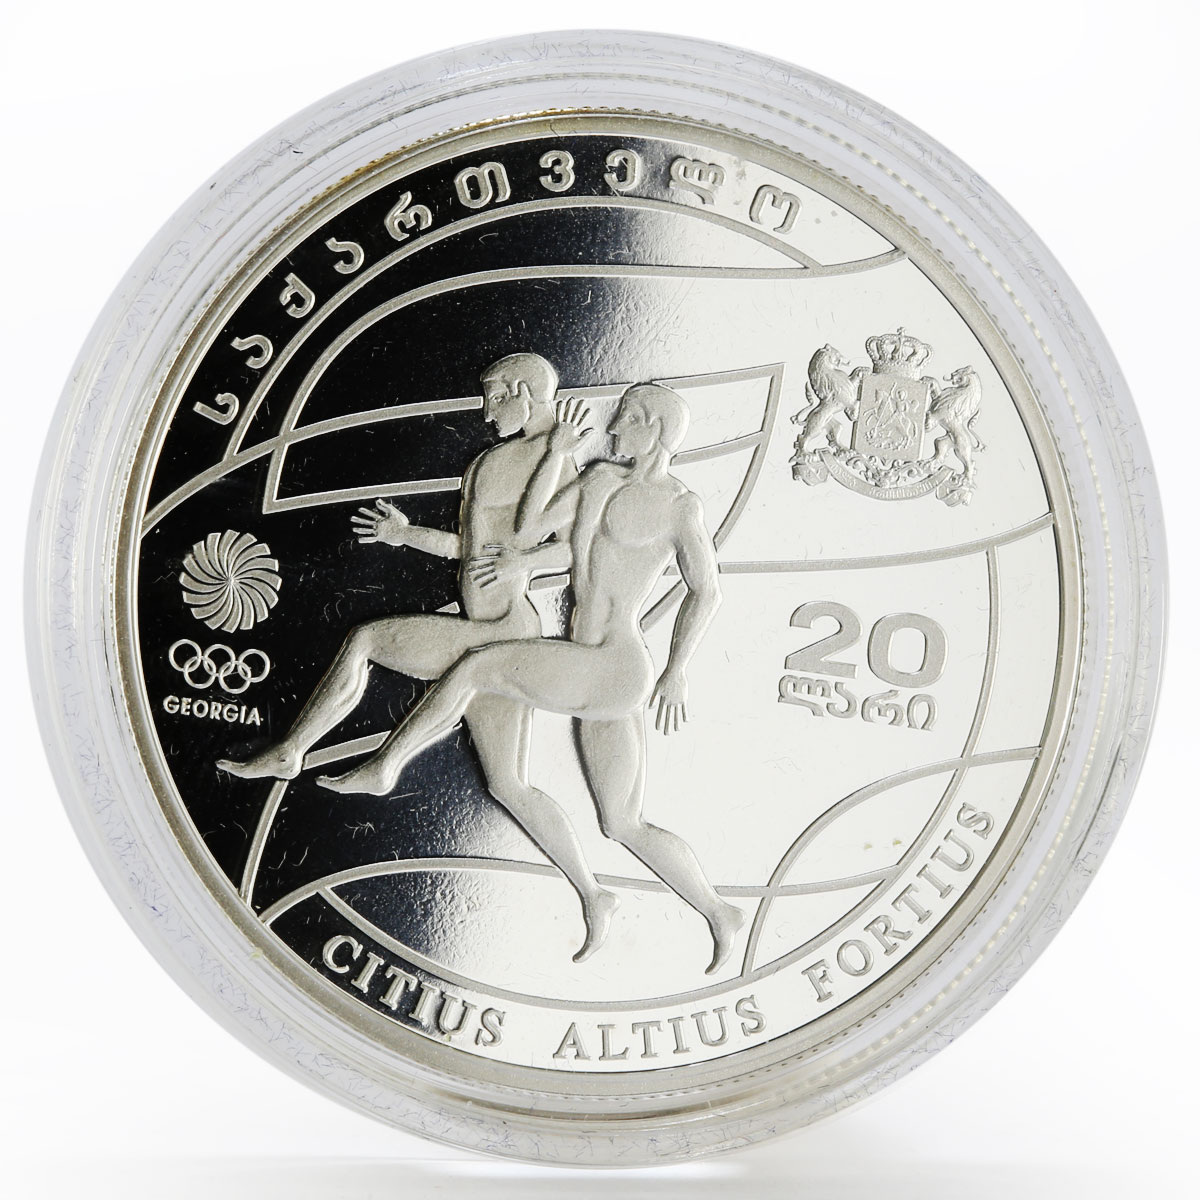 Georgia 20 lari Olympic Games series Beijing Runners proof silver coin 2008